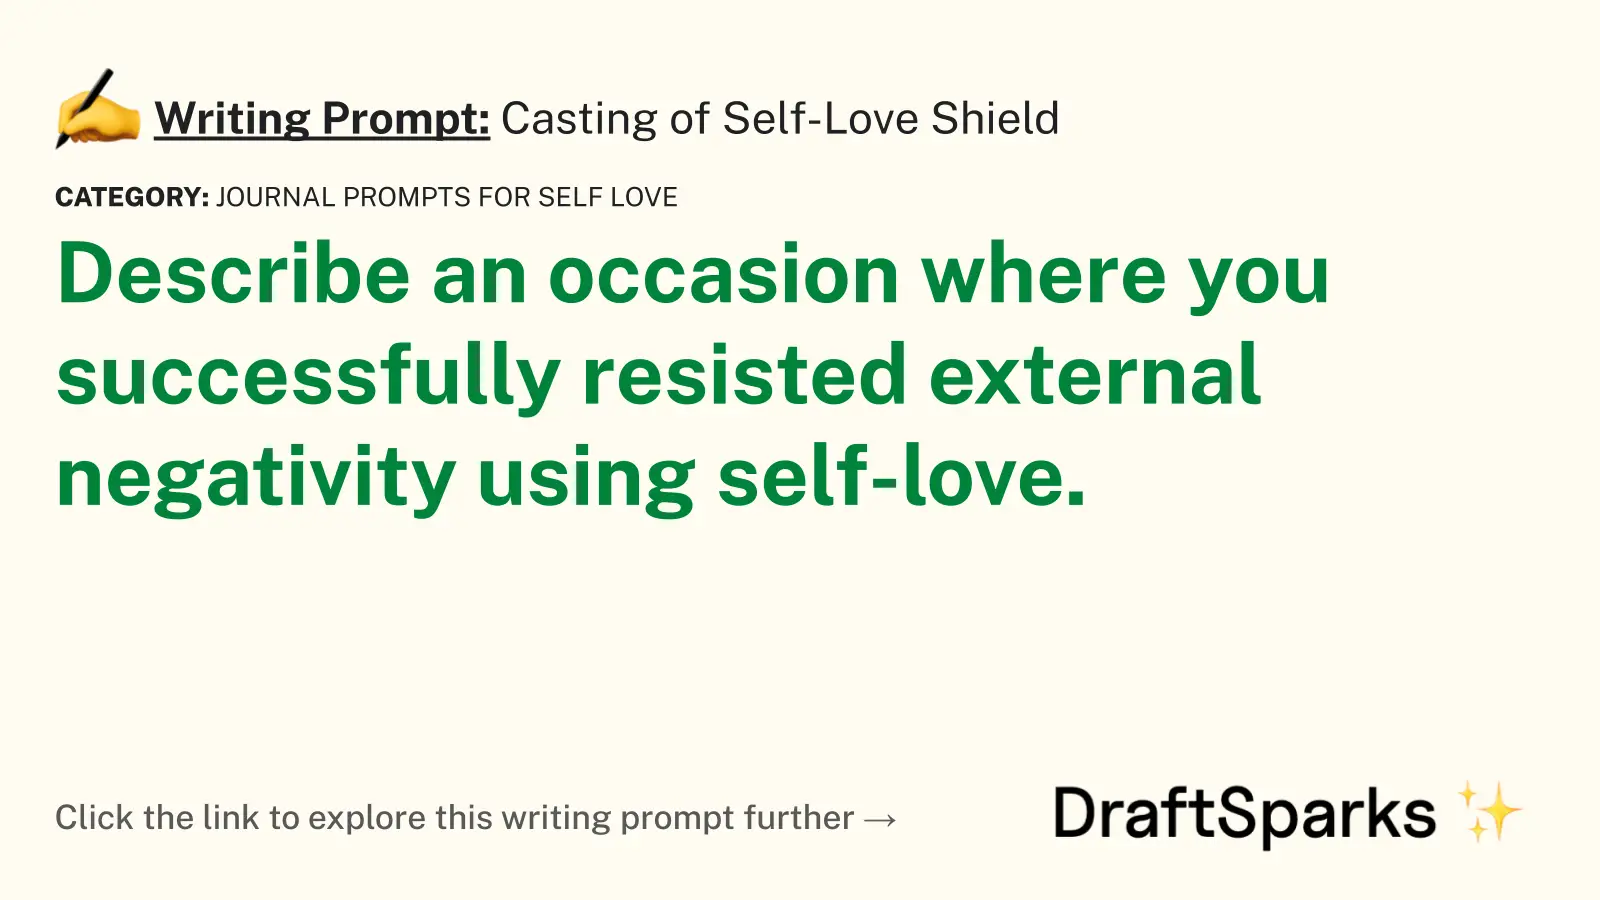 Casting of Self-Love Shield